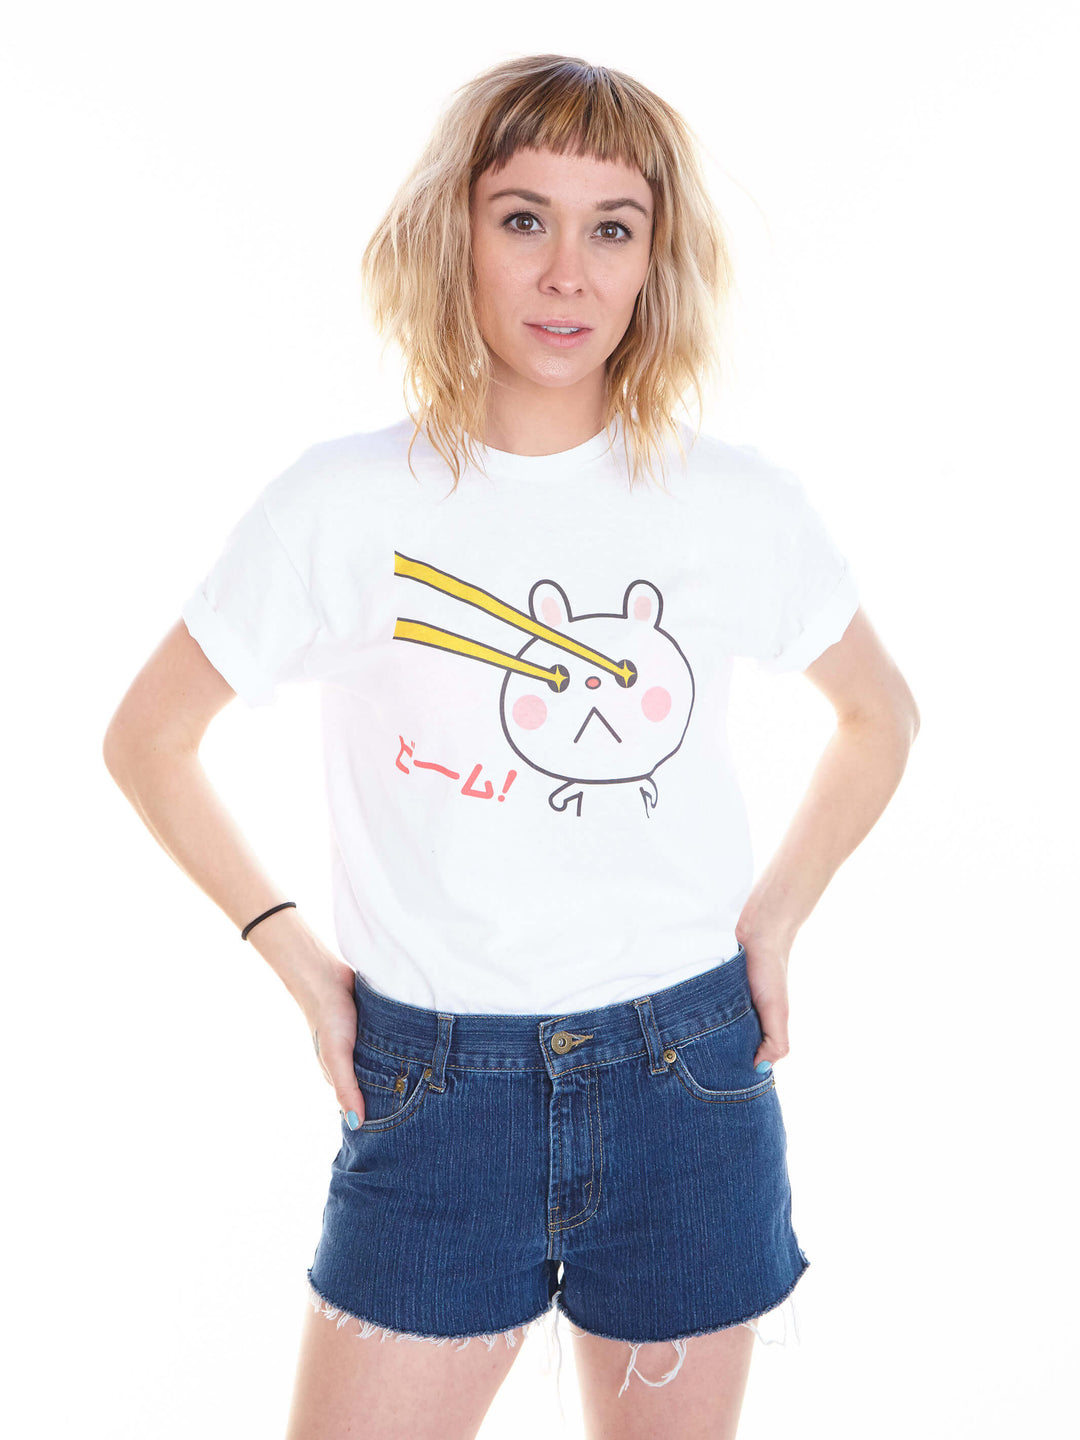 Kawaii lazer beam chibi bunny t-shirt.